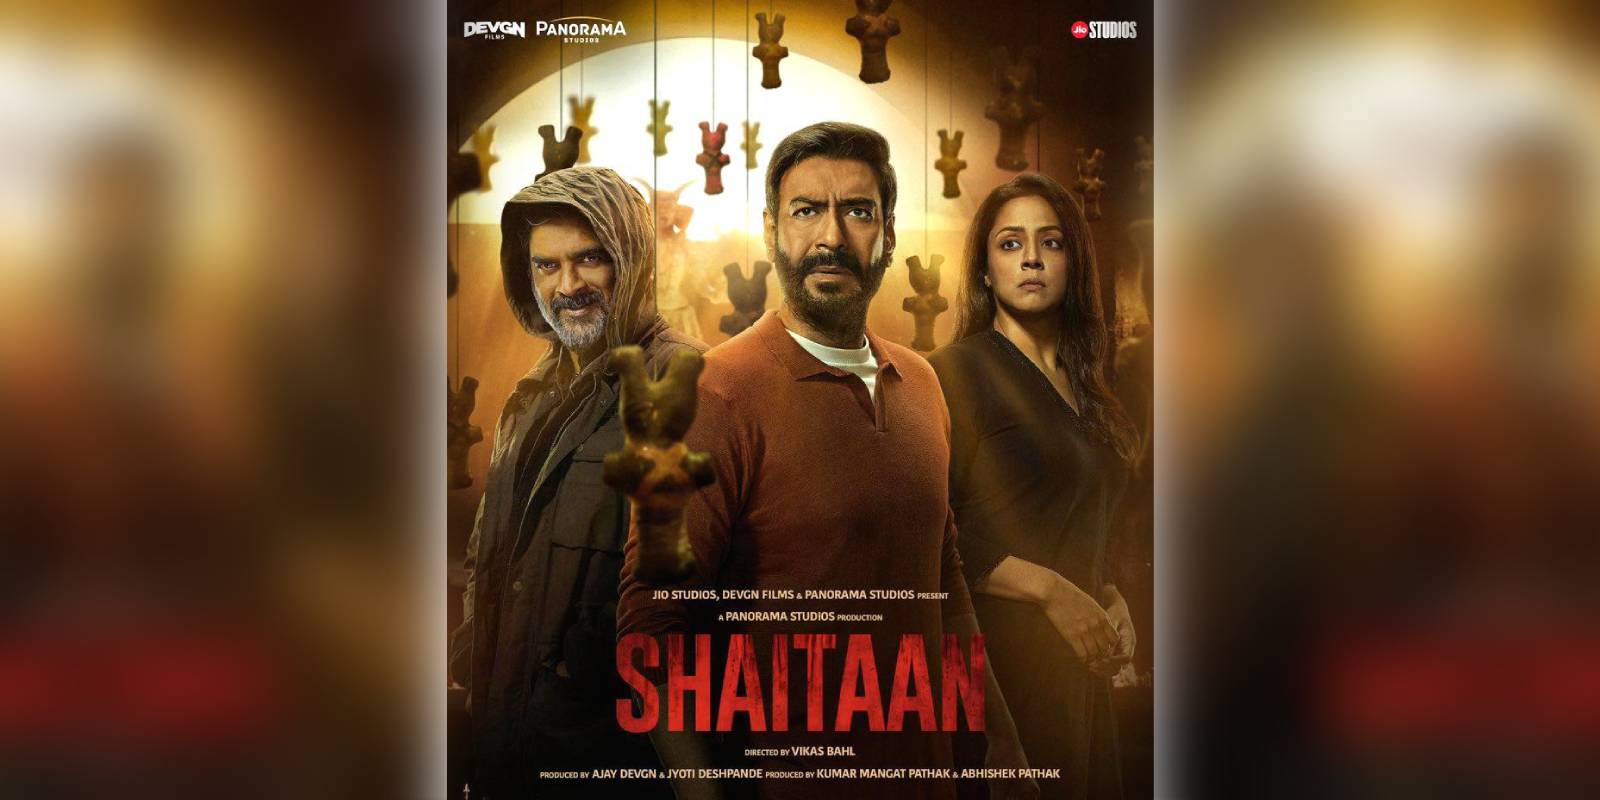 'Shaitaan' Hindi movie review - The South First